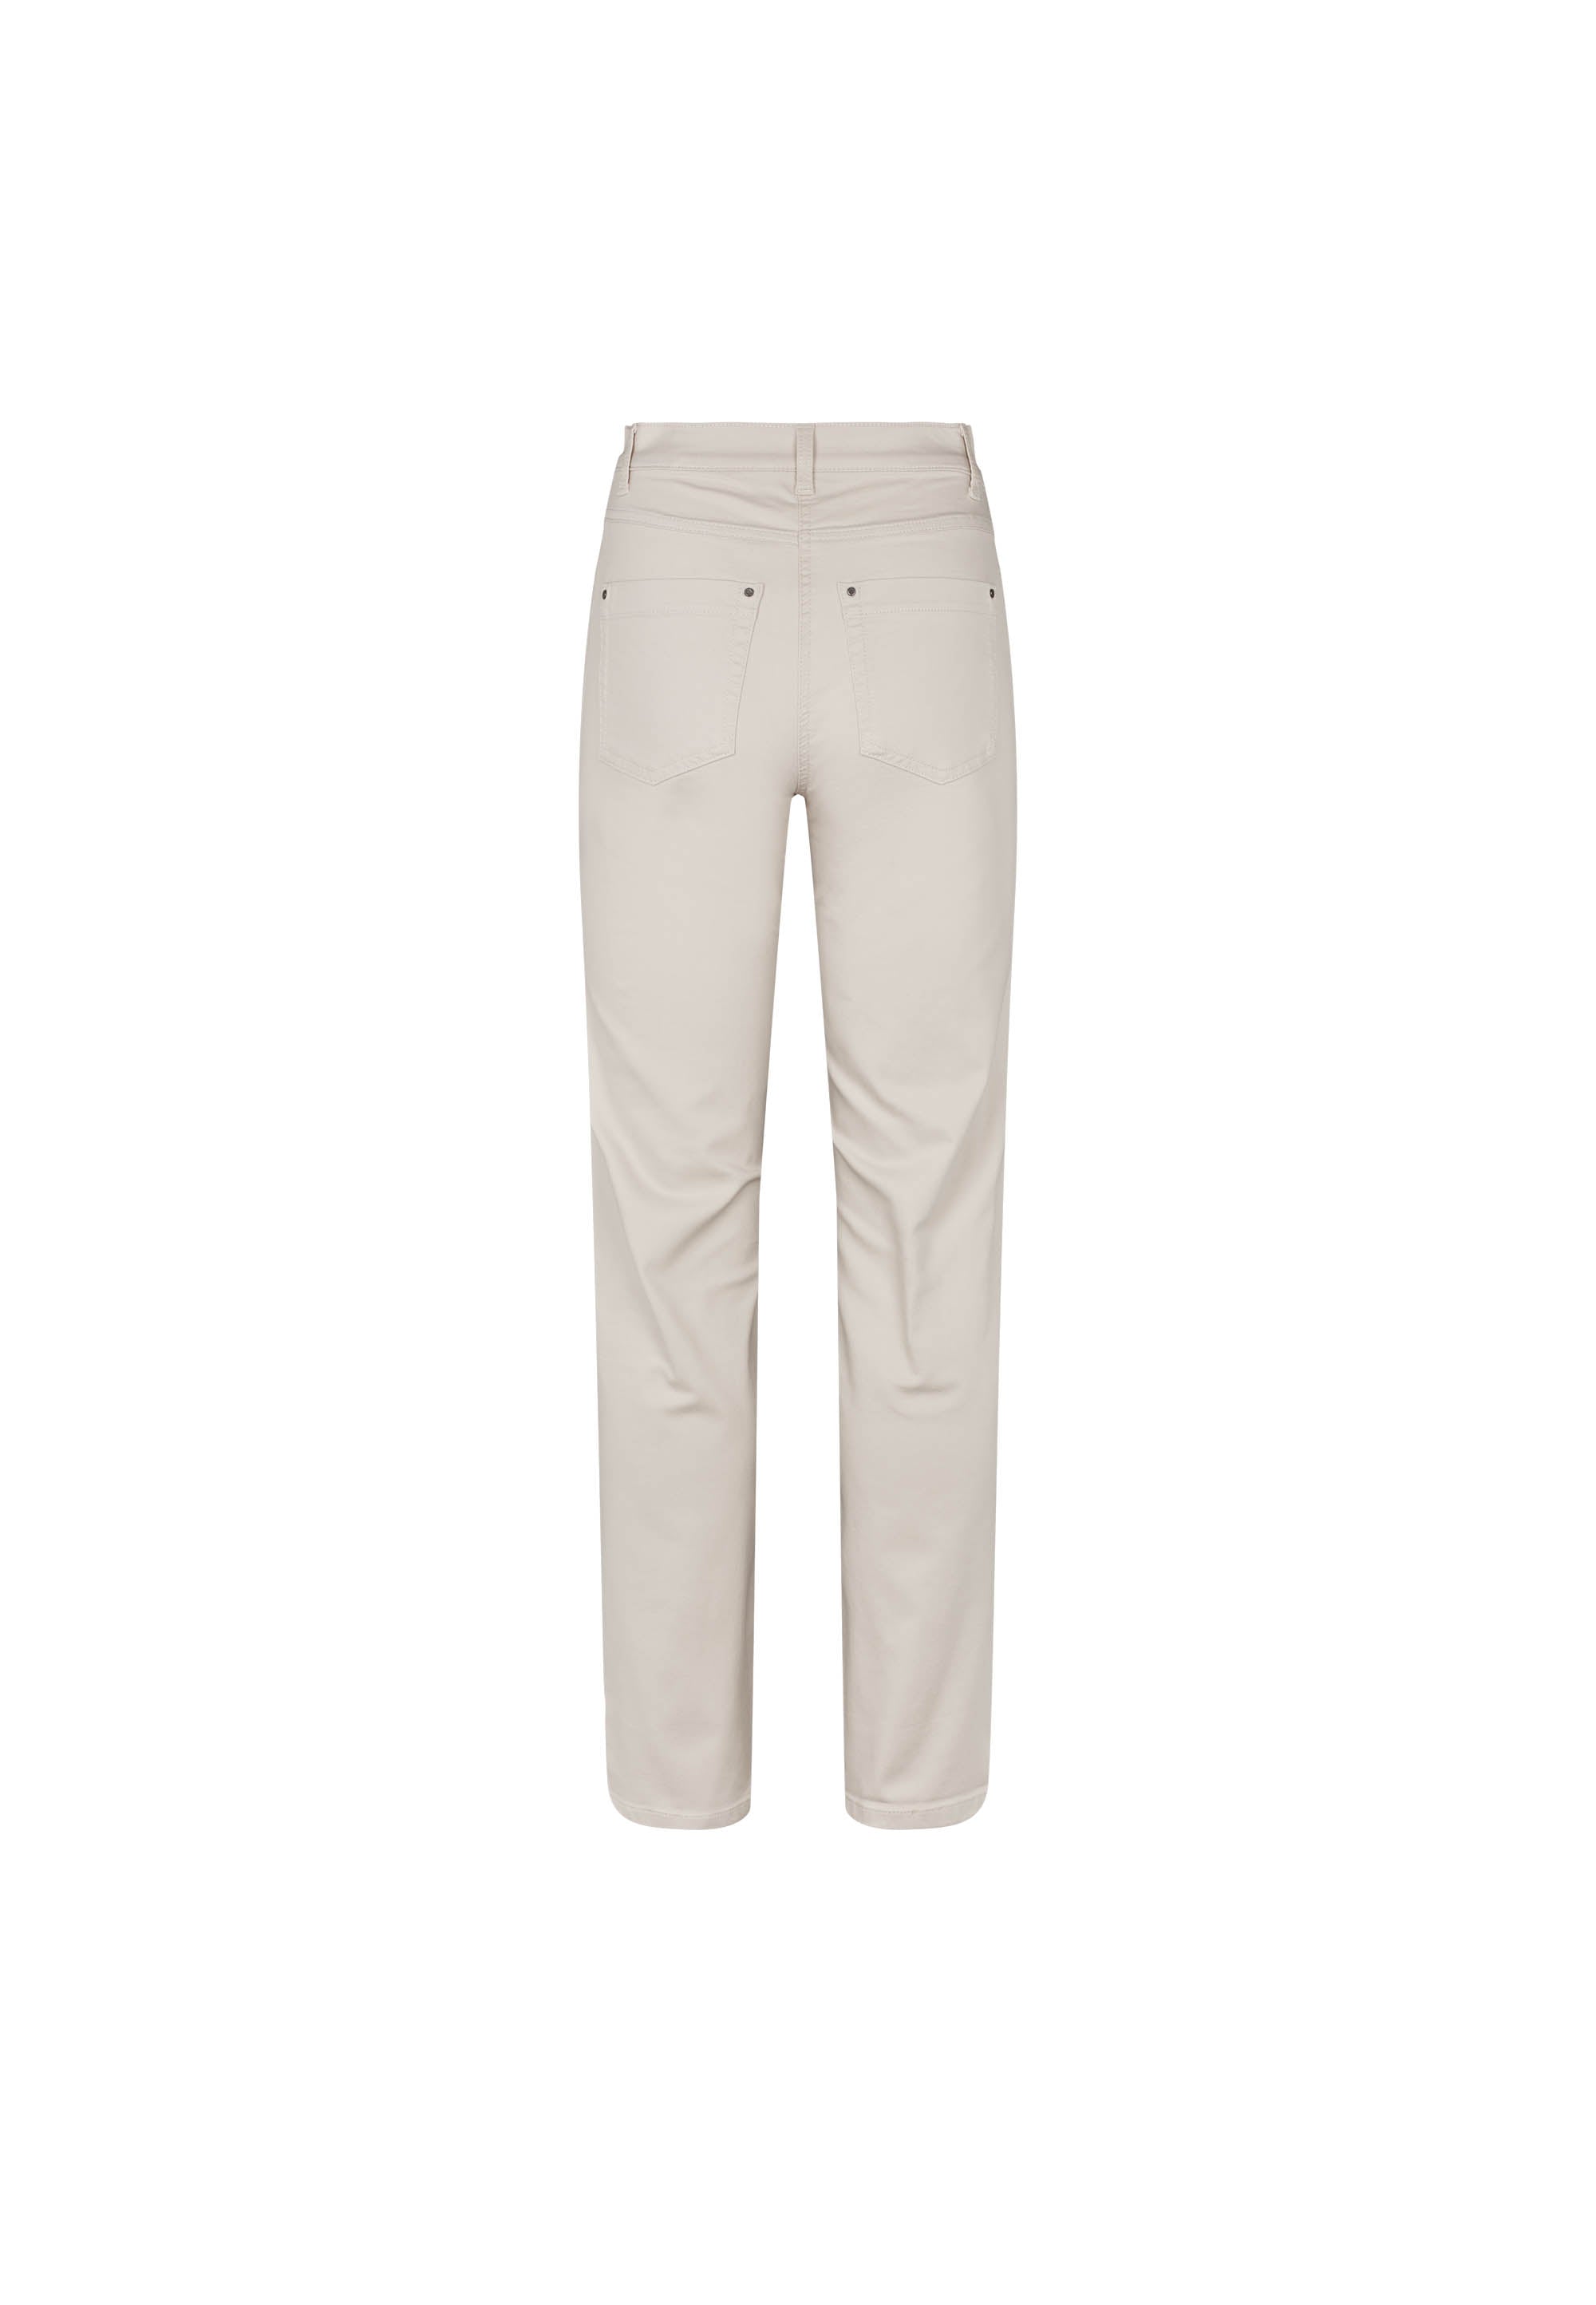 LAURIE Charlotte Regular - Medium Length Trousers REGULAR 25107 Grey Sand